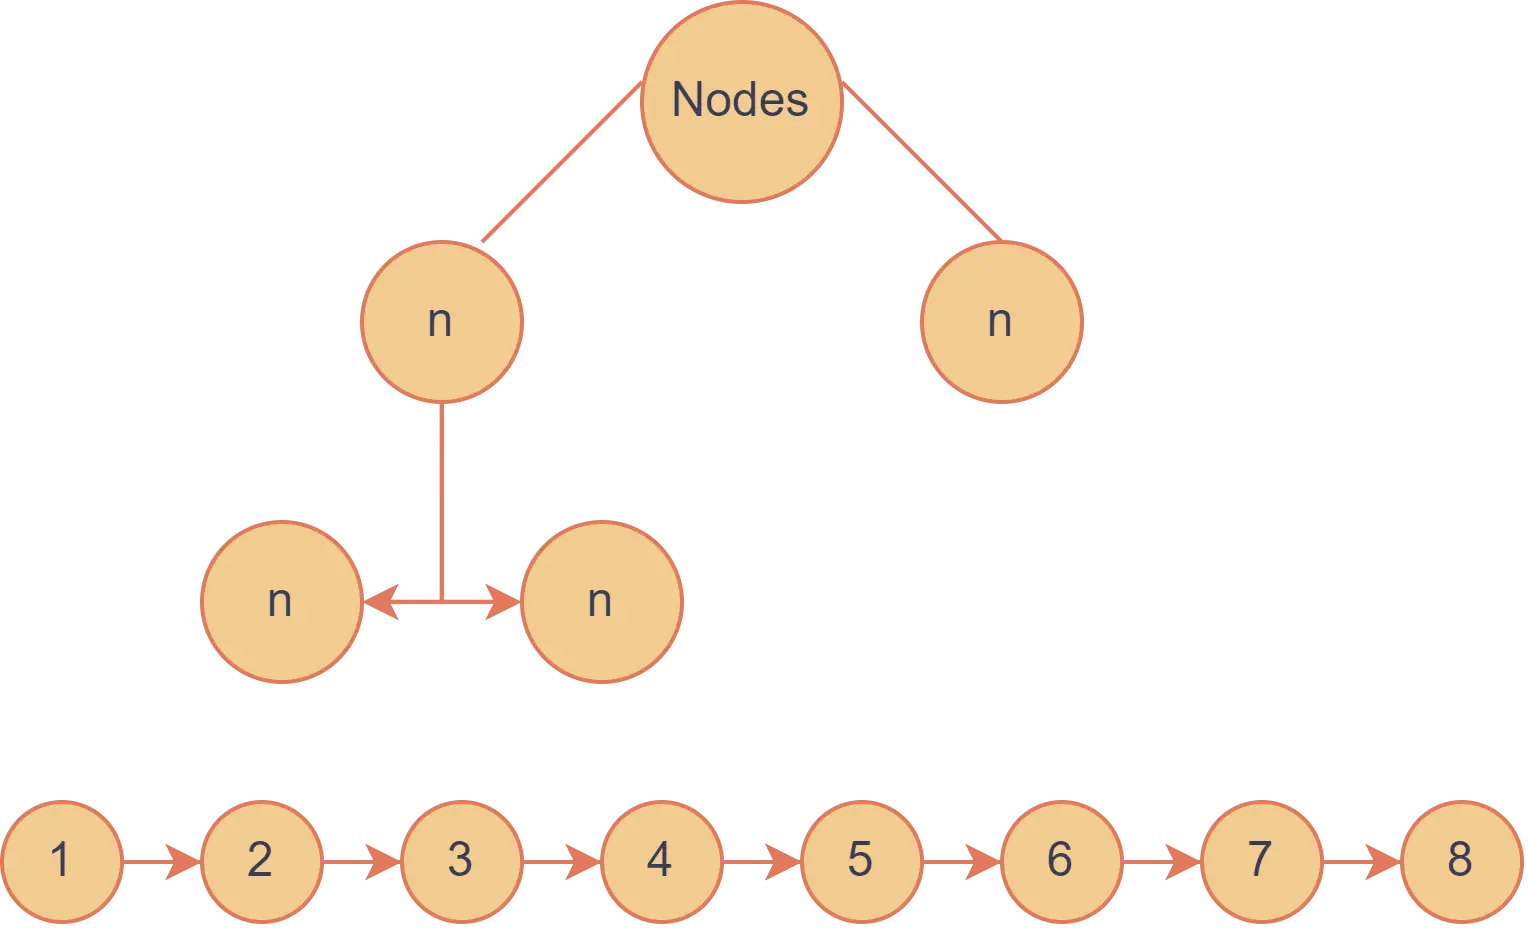 bubble sort nodes demo